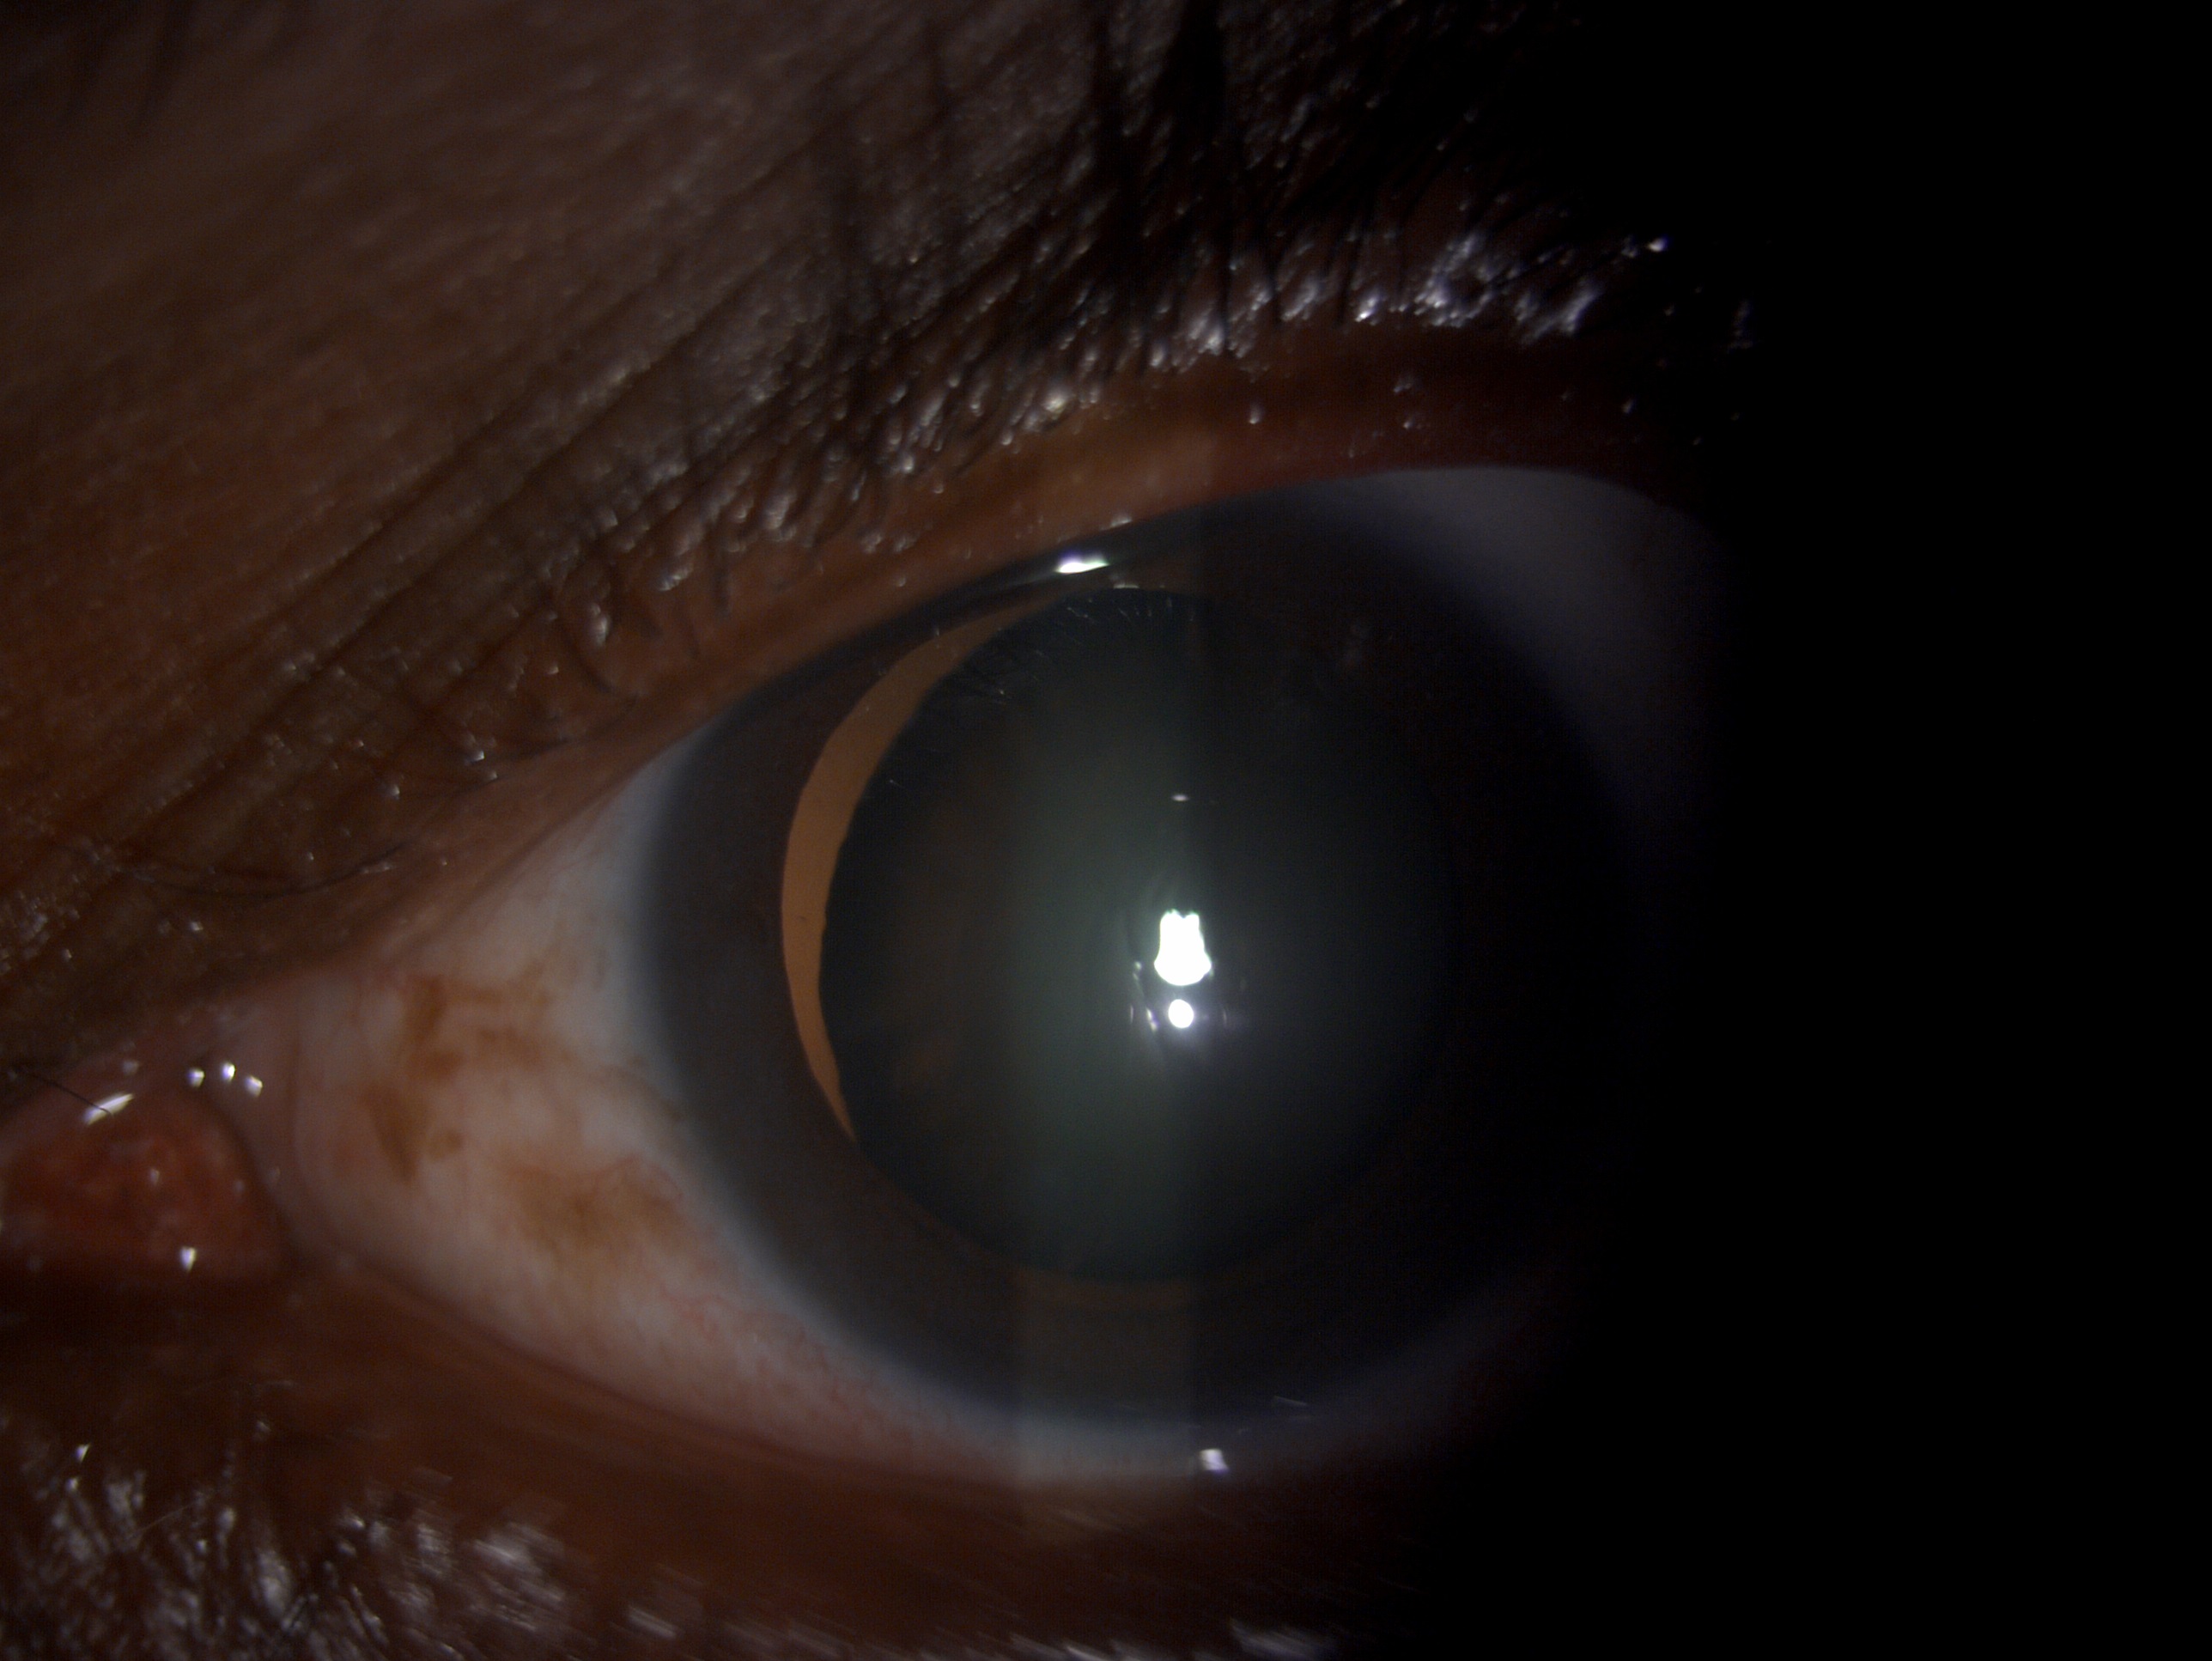 Digital retro-illumination slit lamp image of the patient depicting microspherophakic lens